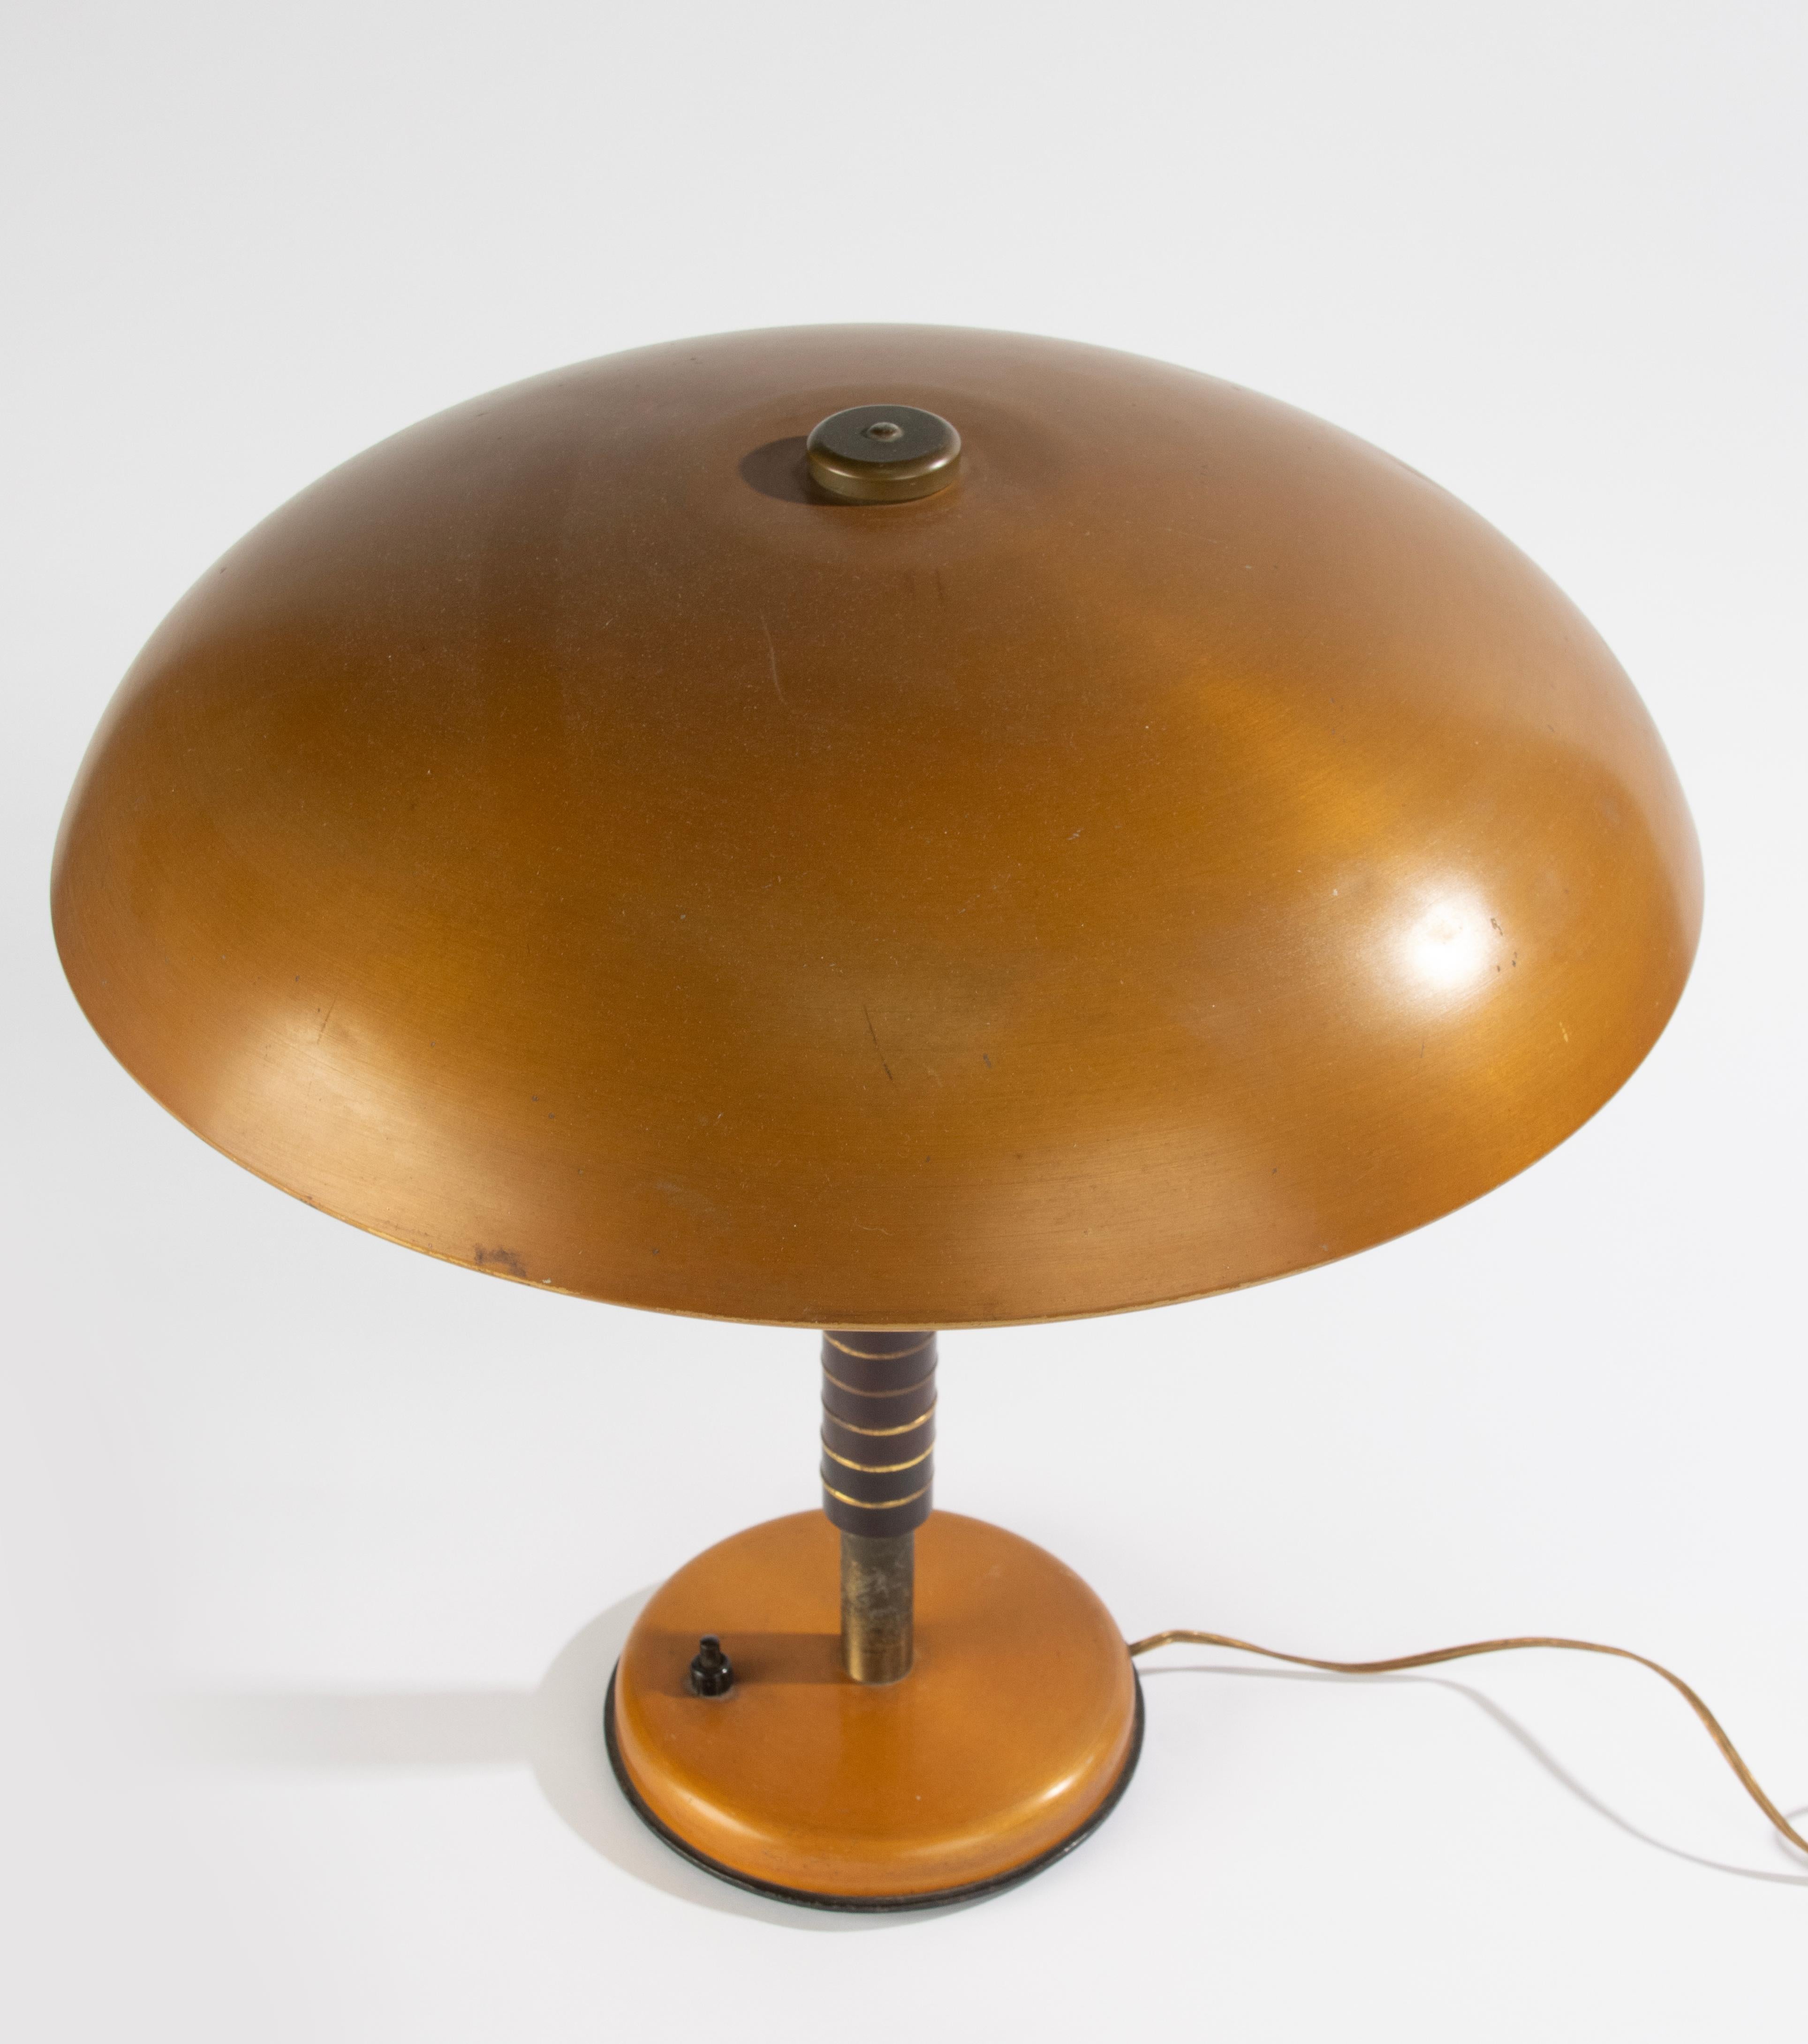 Vintage Bauhaus Table Lamp - 1940's - Bakelite and Metal  For Sale 2